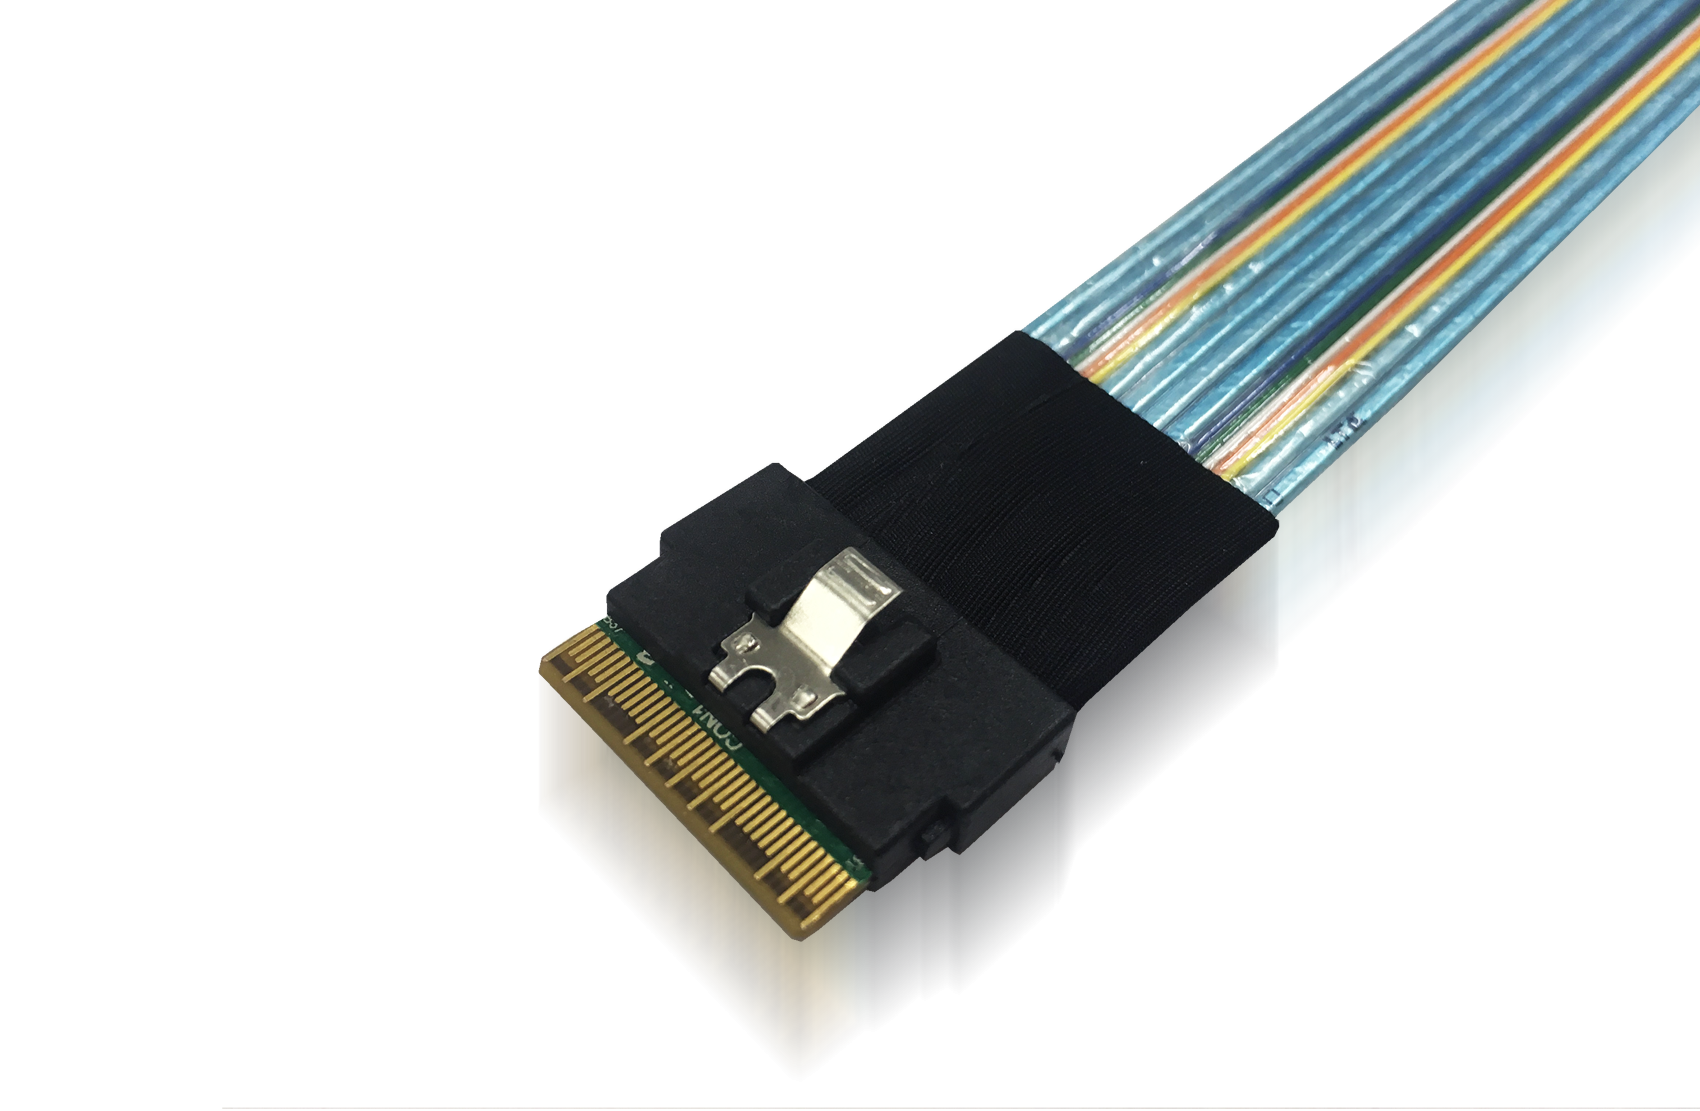 310103 Slimline SAS 8i Cable